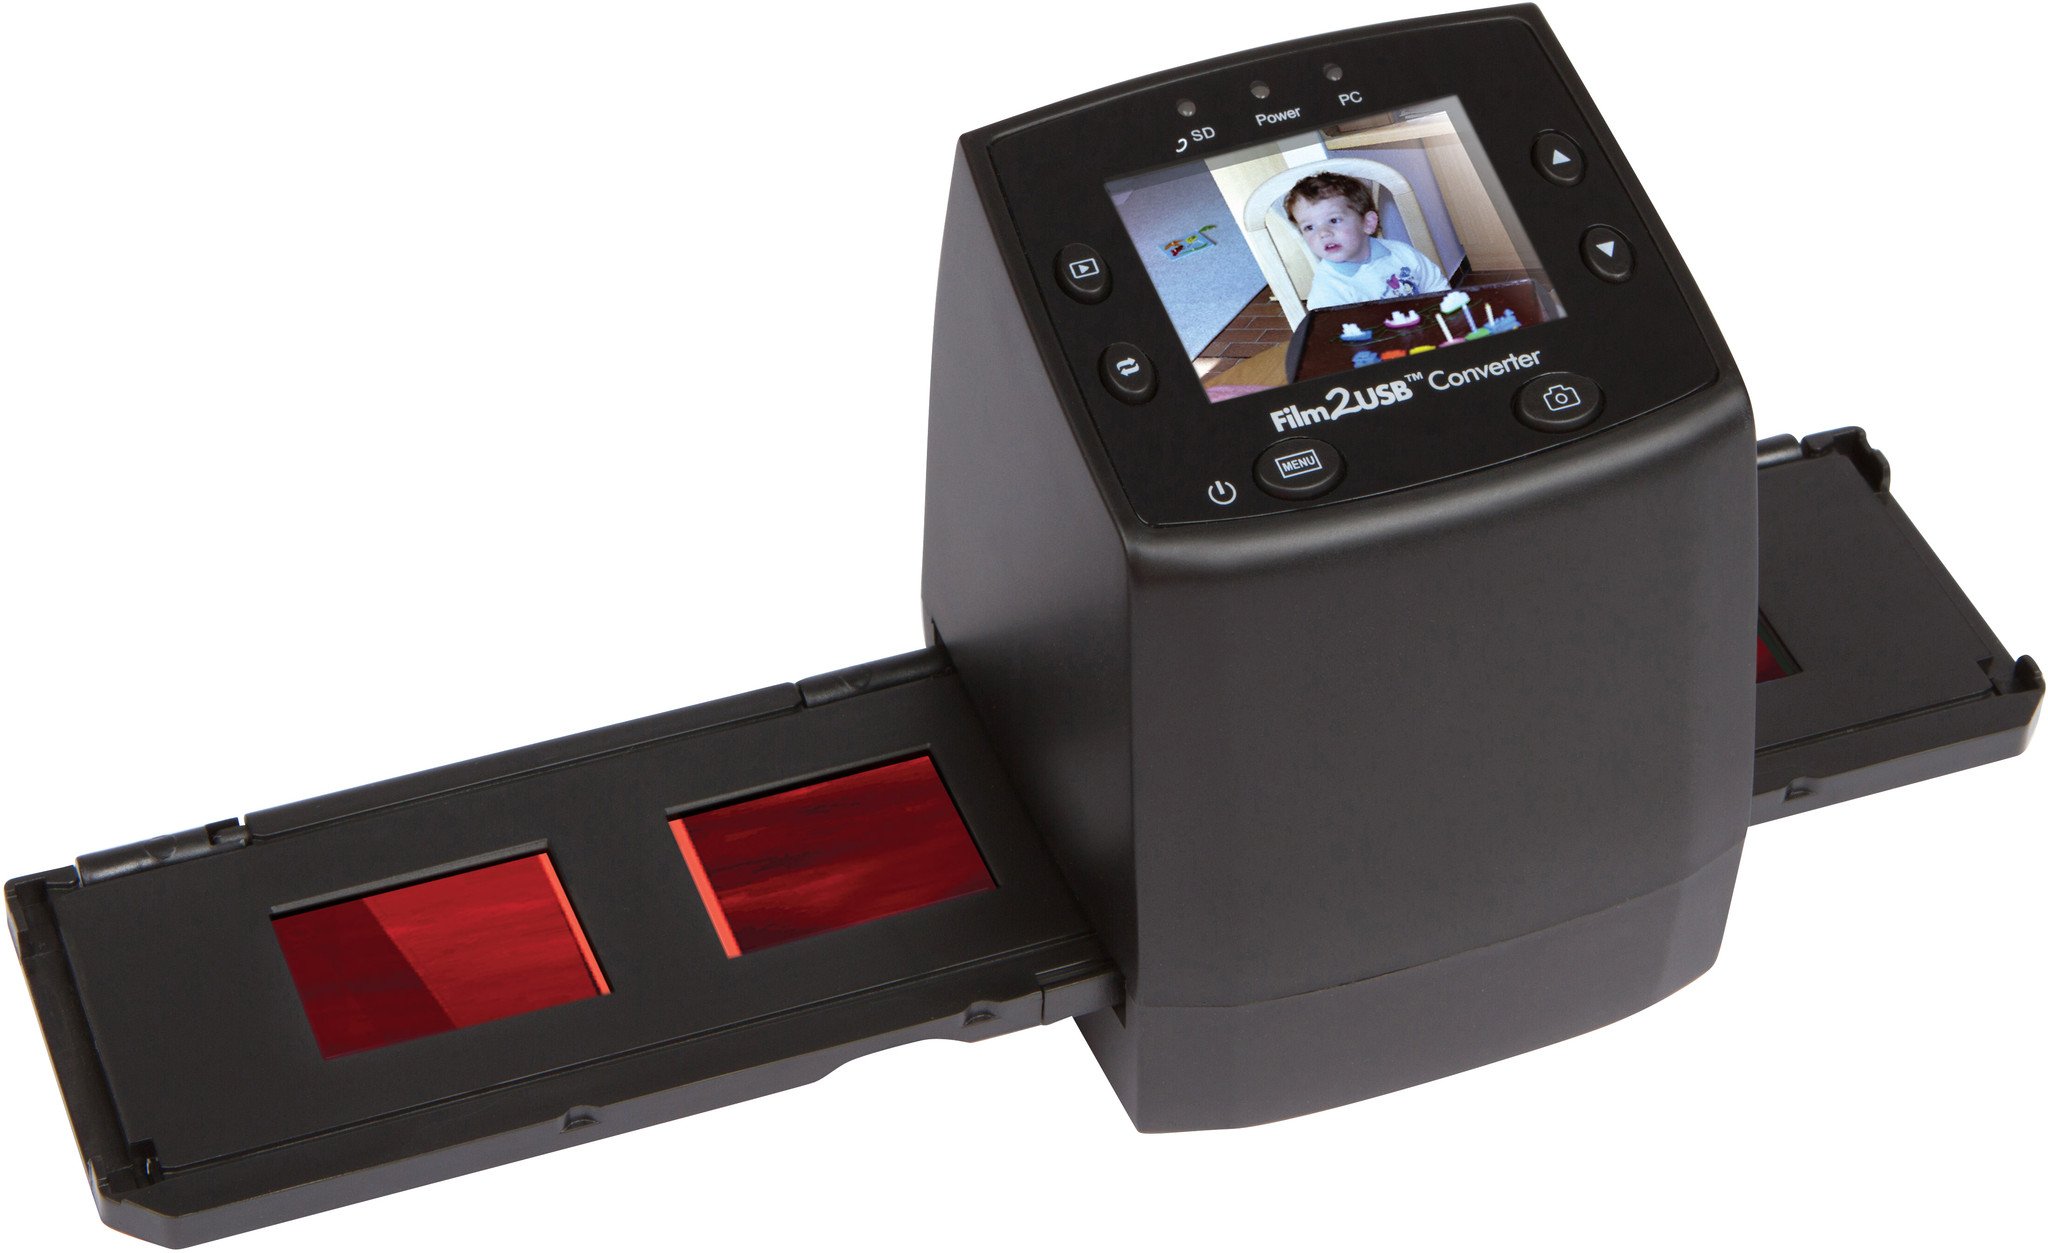 35mm Slide Converters To Digital